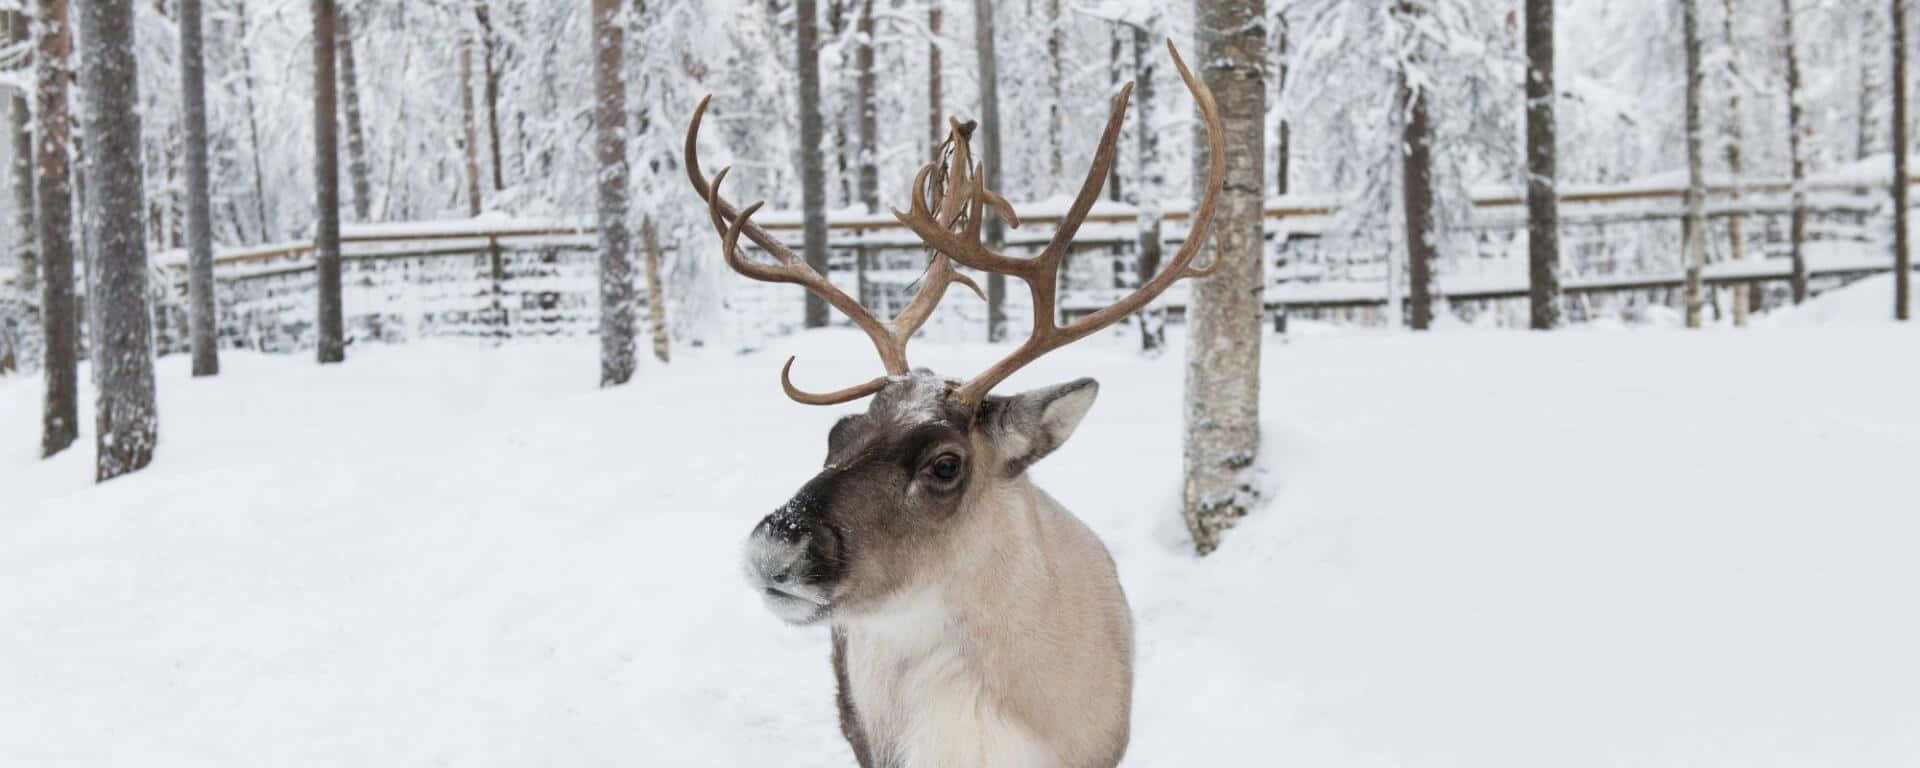 Majestic Reindeer in its Natural Habitat